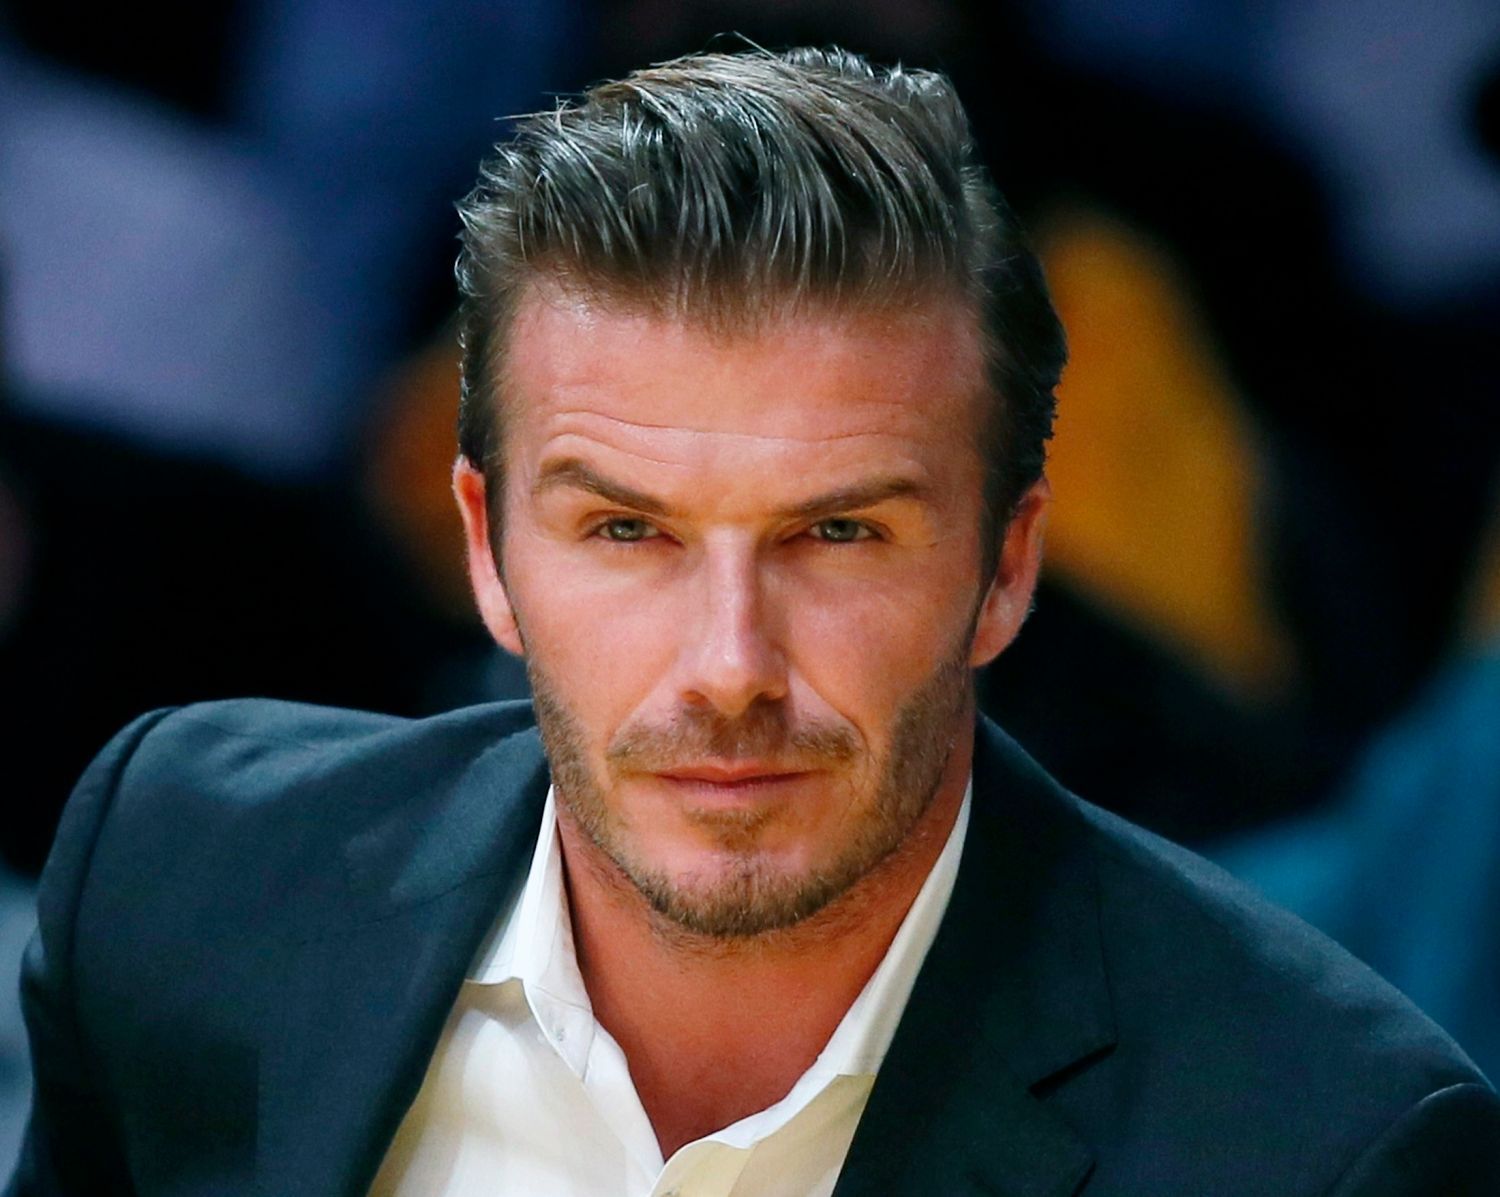 Fotbalista David Beckham sleduje utkání NBA 2012/13 mezi Los Angeles Lakers a Dallasem Maverics.